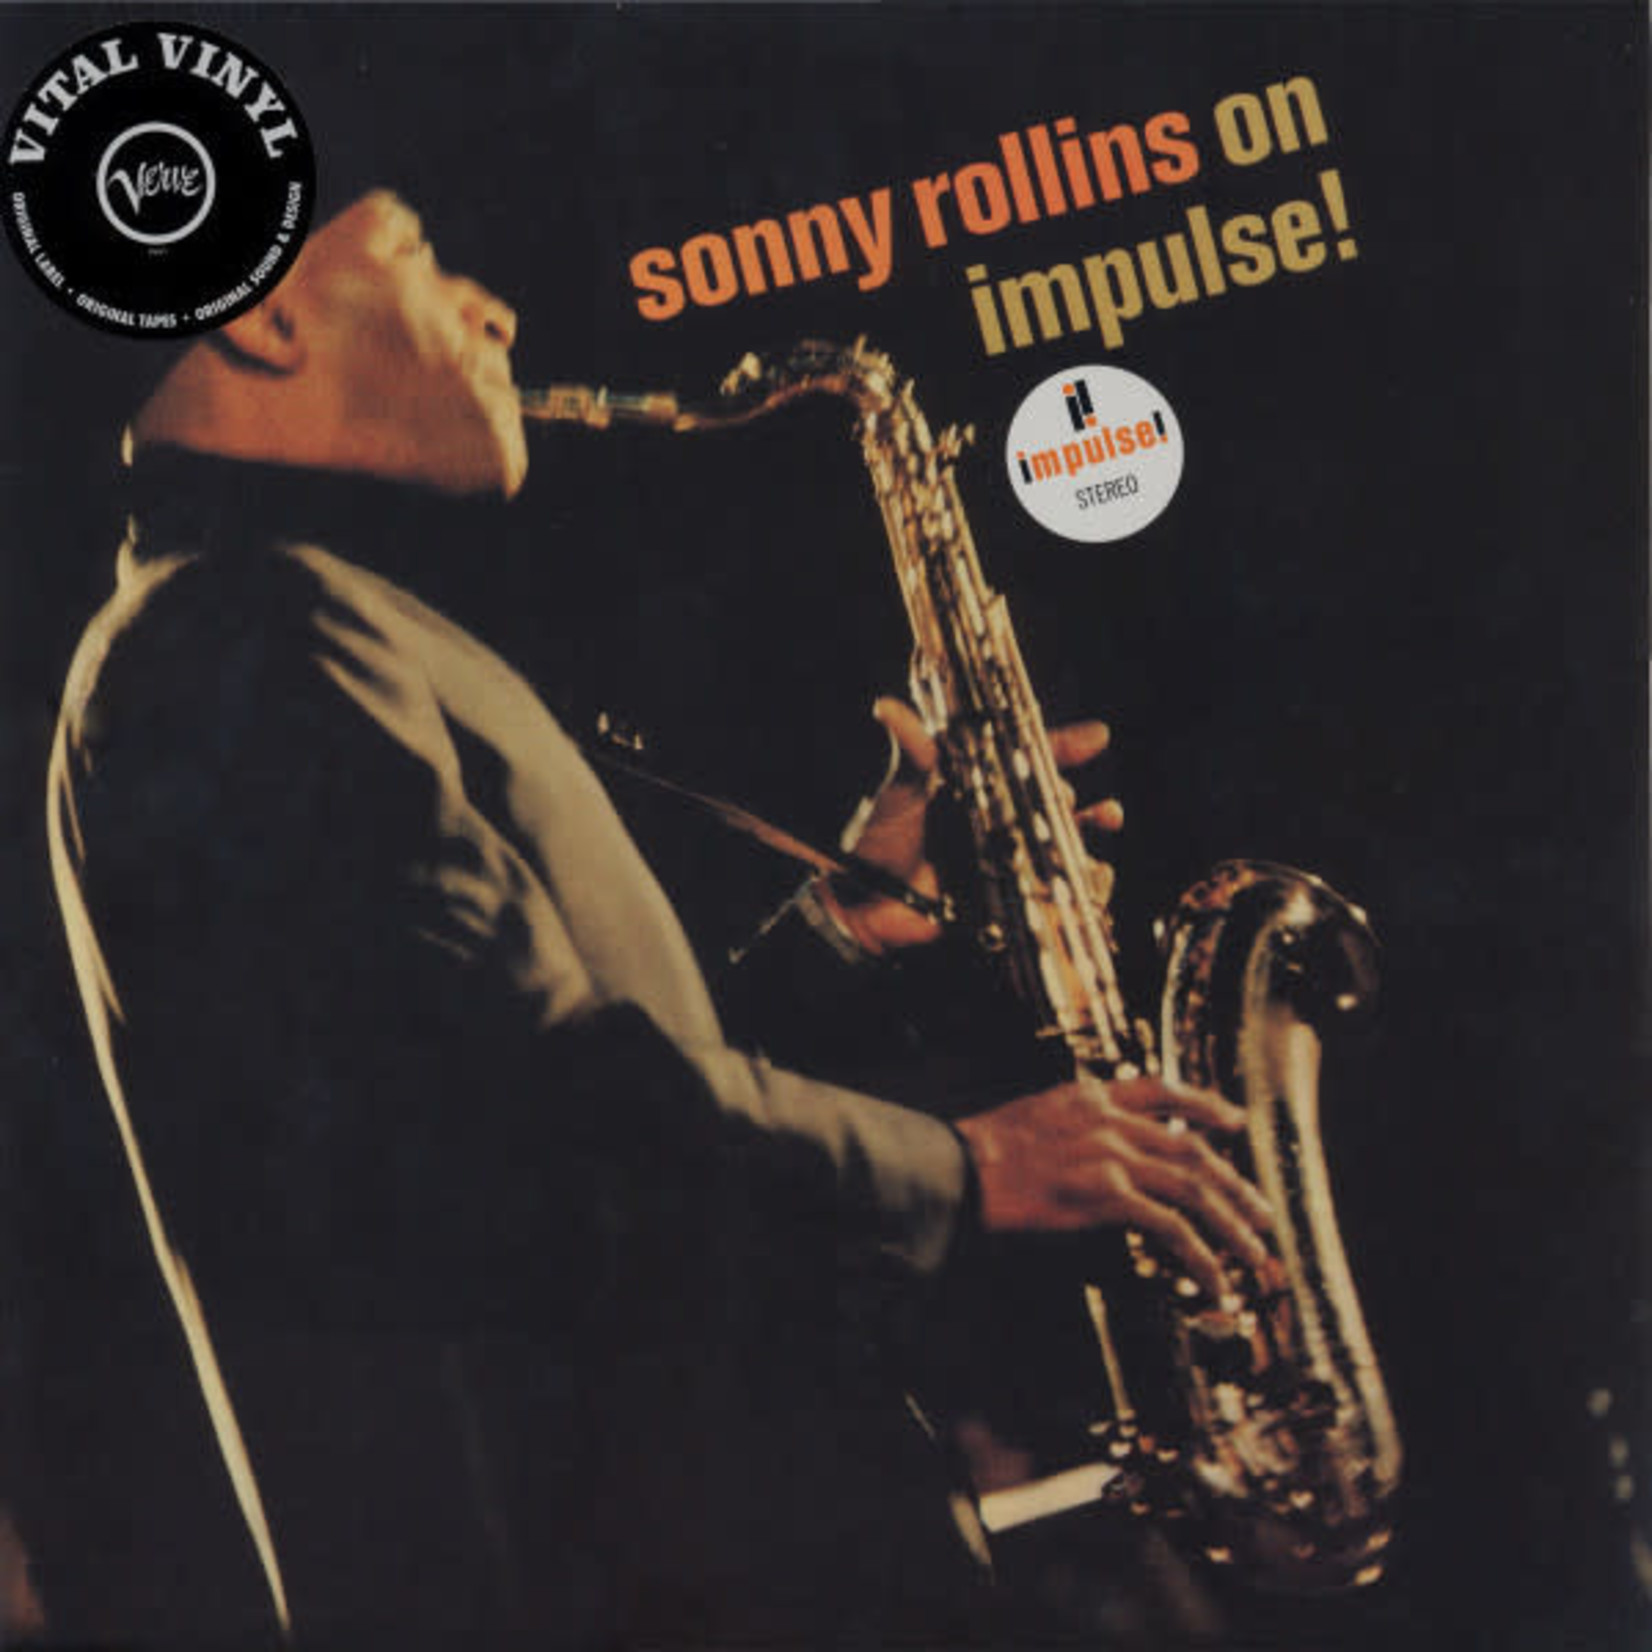 Impulse! Sonny Rollins - Sonny Rollins On Impulse (LP)